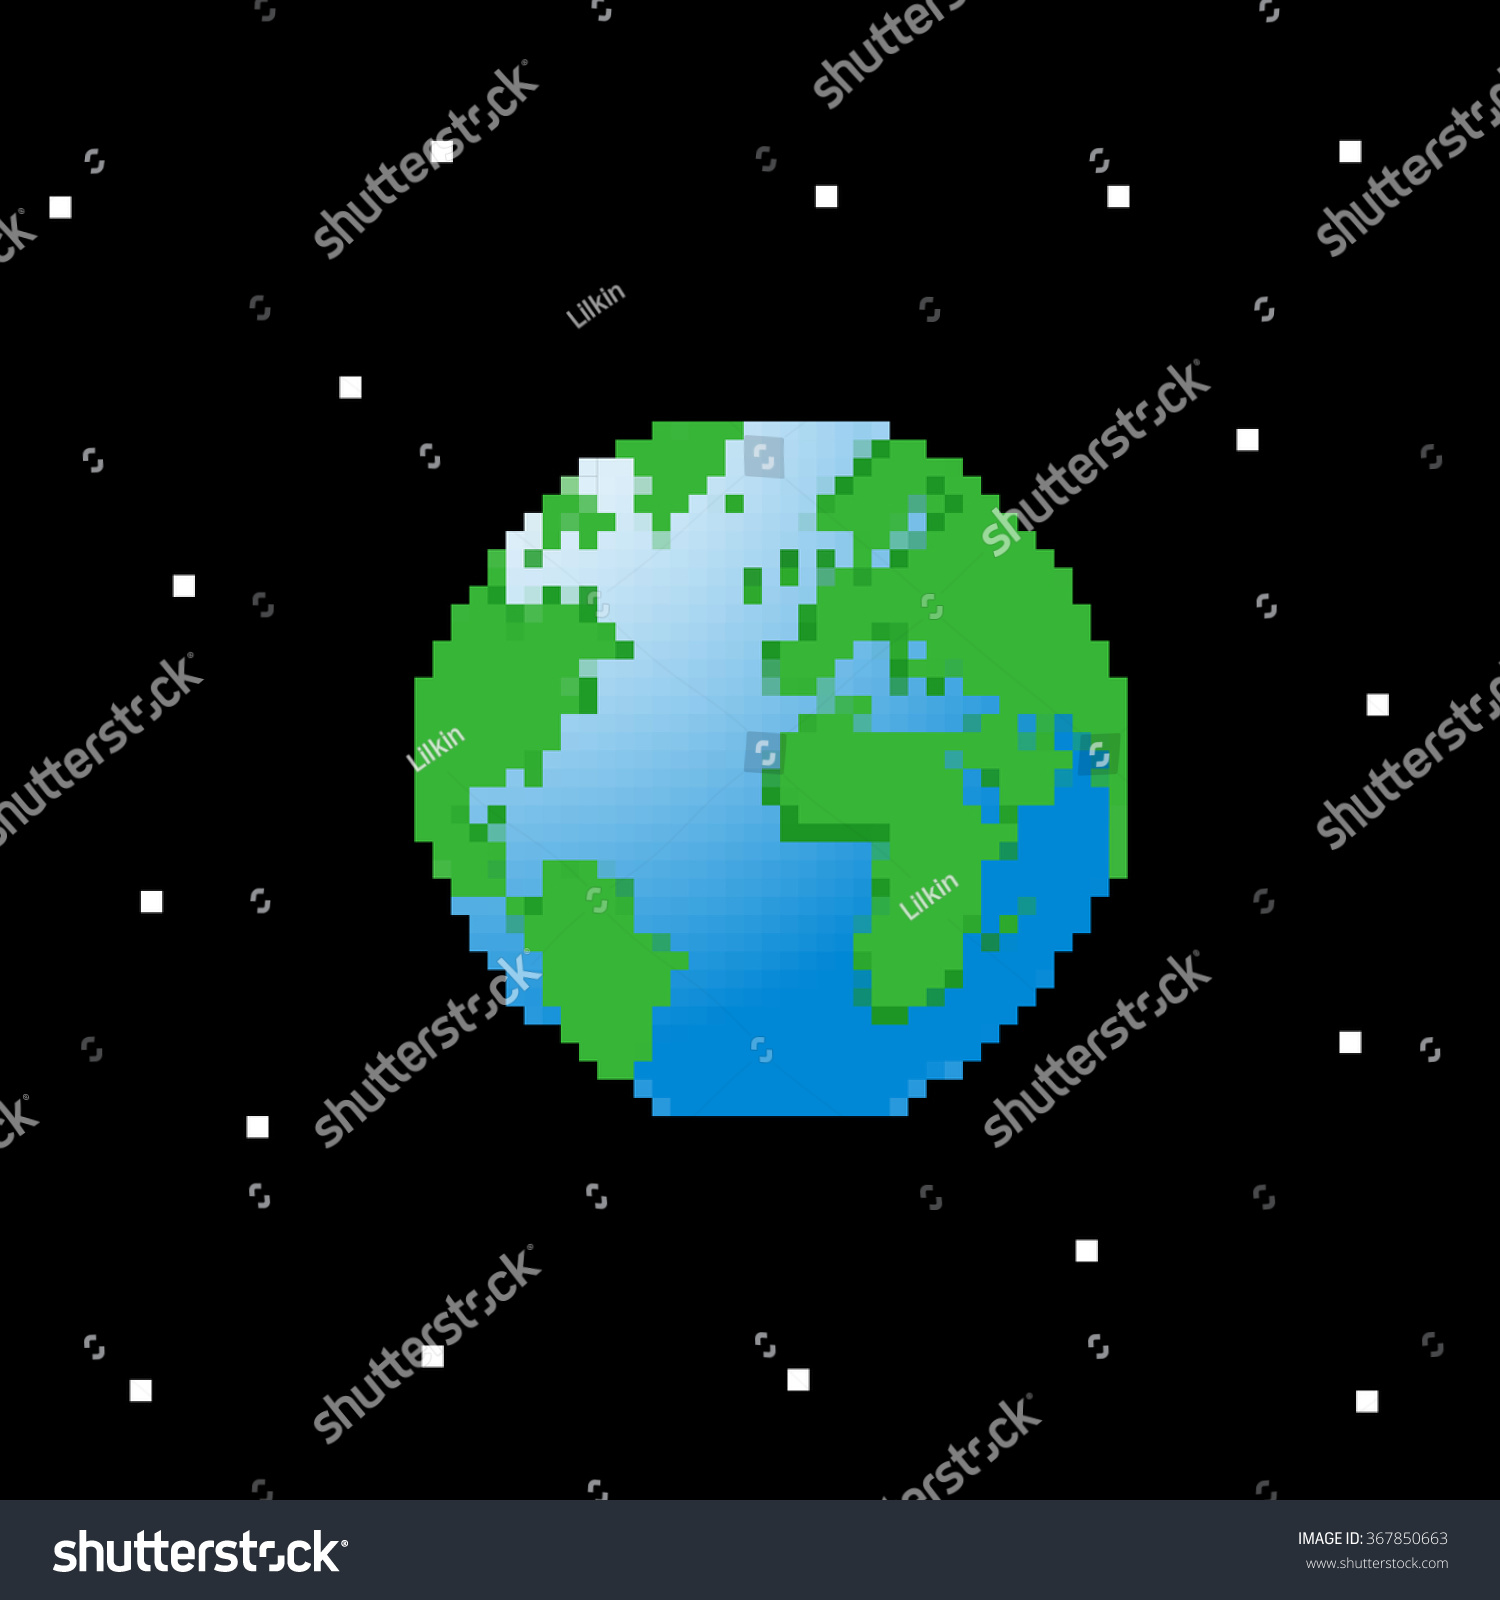 Planet Earth Pixel Art Vector Illustration Vetor Stock Livre De Direitos Shutterstock